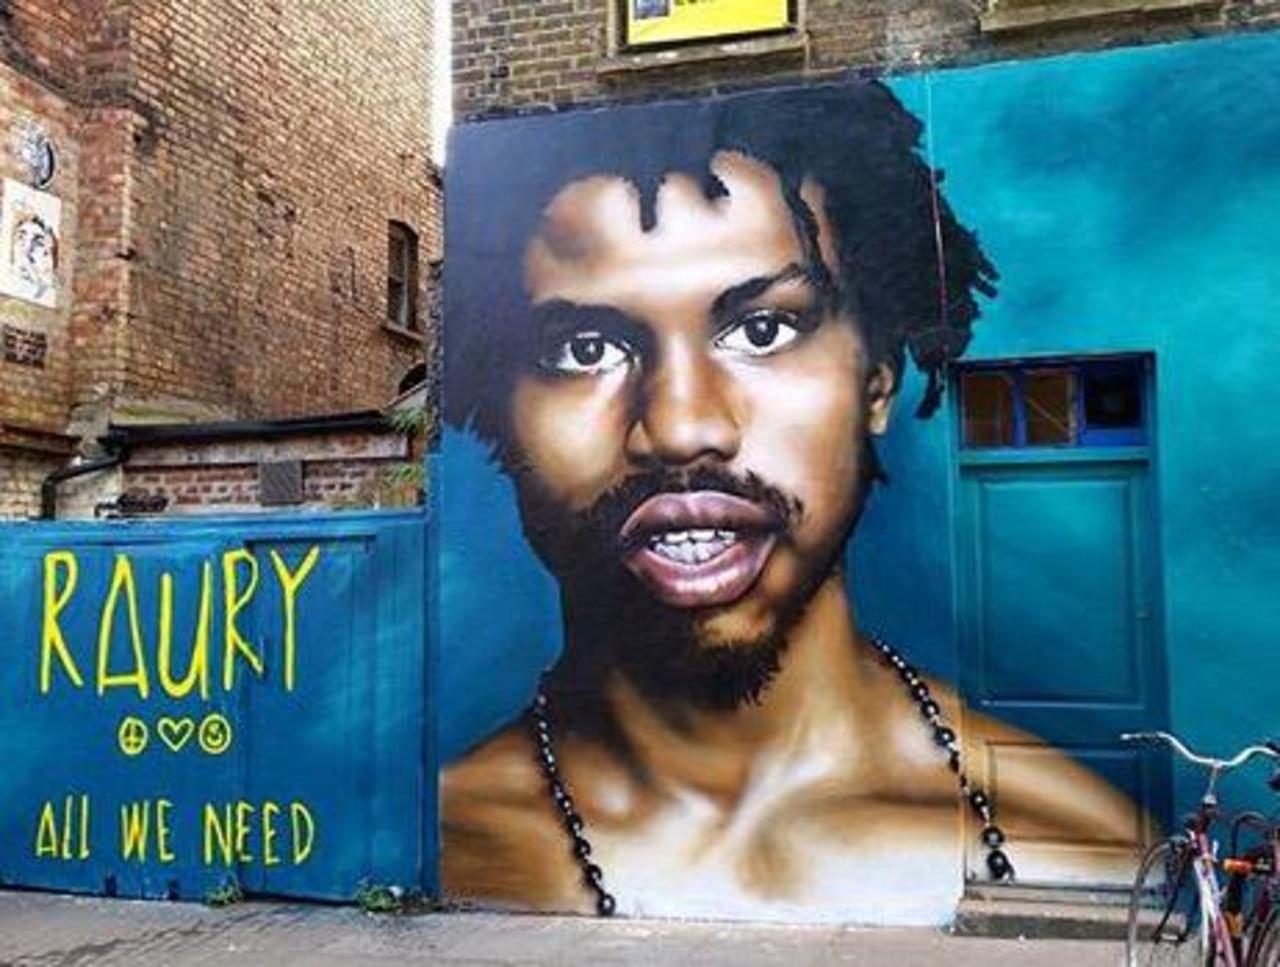 New Street Art of Raury by Olliver Switch in Brick Lane 

#art #graffiti #mural #streetart http://t.co/ttzBcWynCj http://twitter.com/GoogleStreetArt/status/654166805355868160/photo/1/large?utm_source=fb&utm_medium=fb&utm_campaign=charlesjackso14&utm_content=654281065155182592